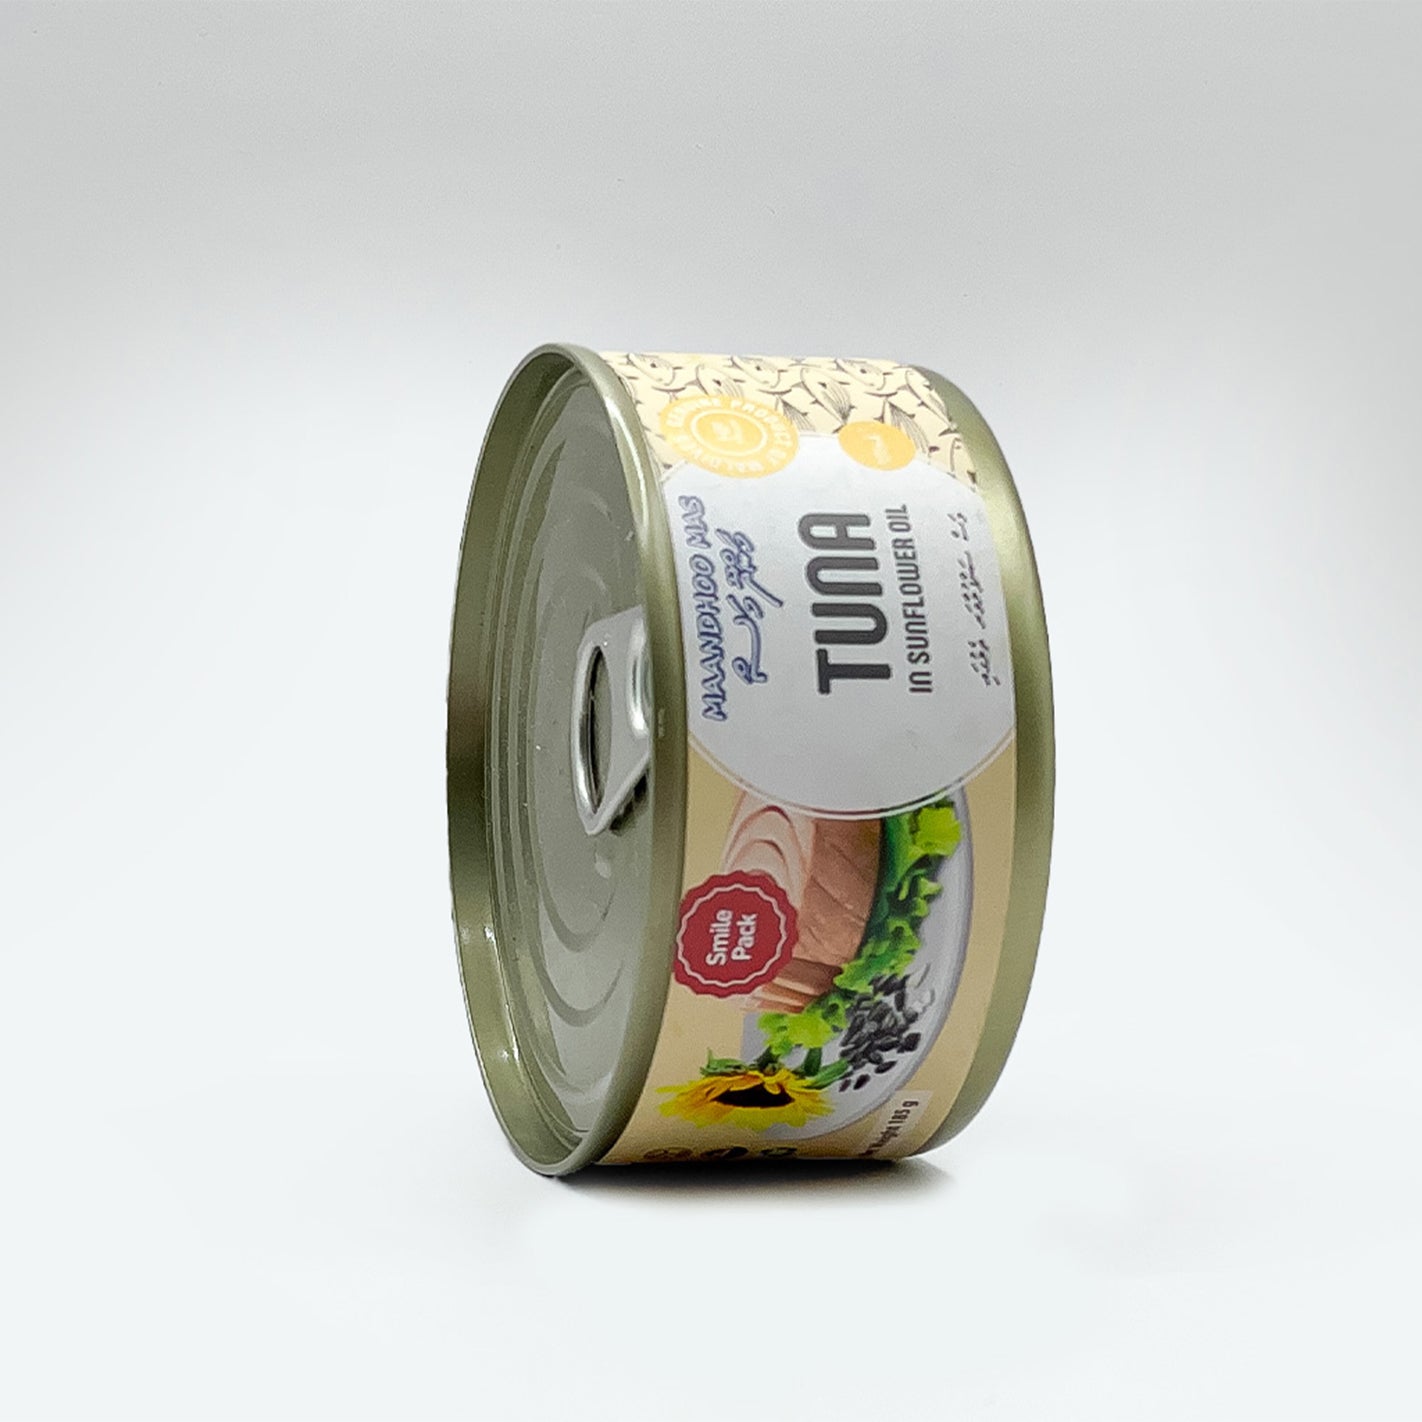 Tuna in Sunflower Oil (185g)